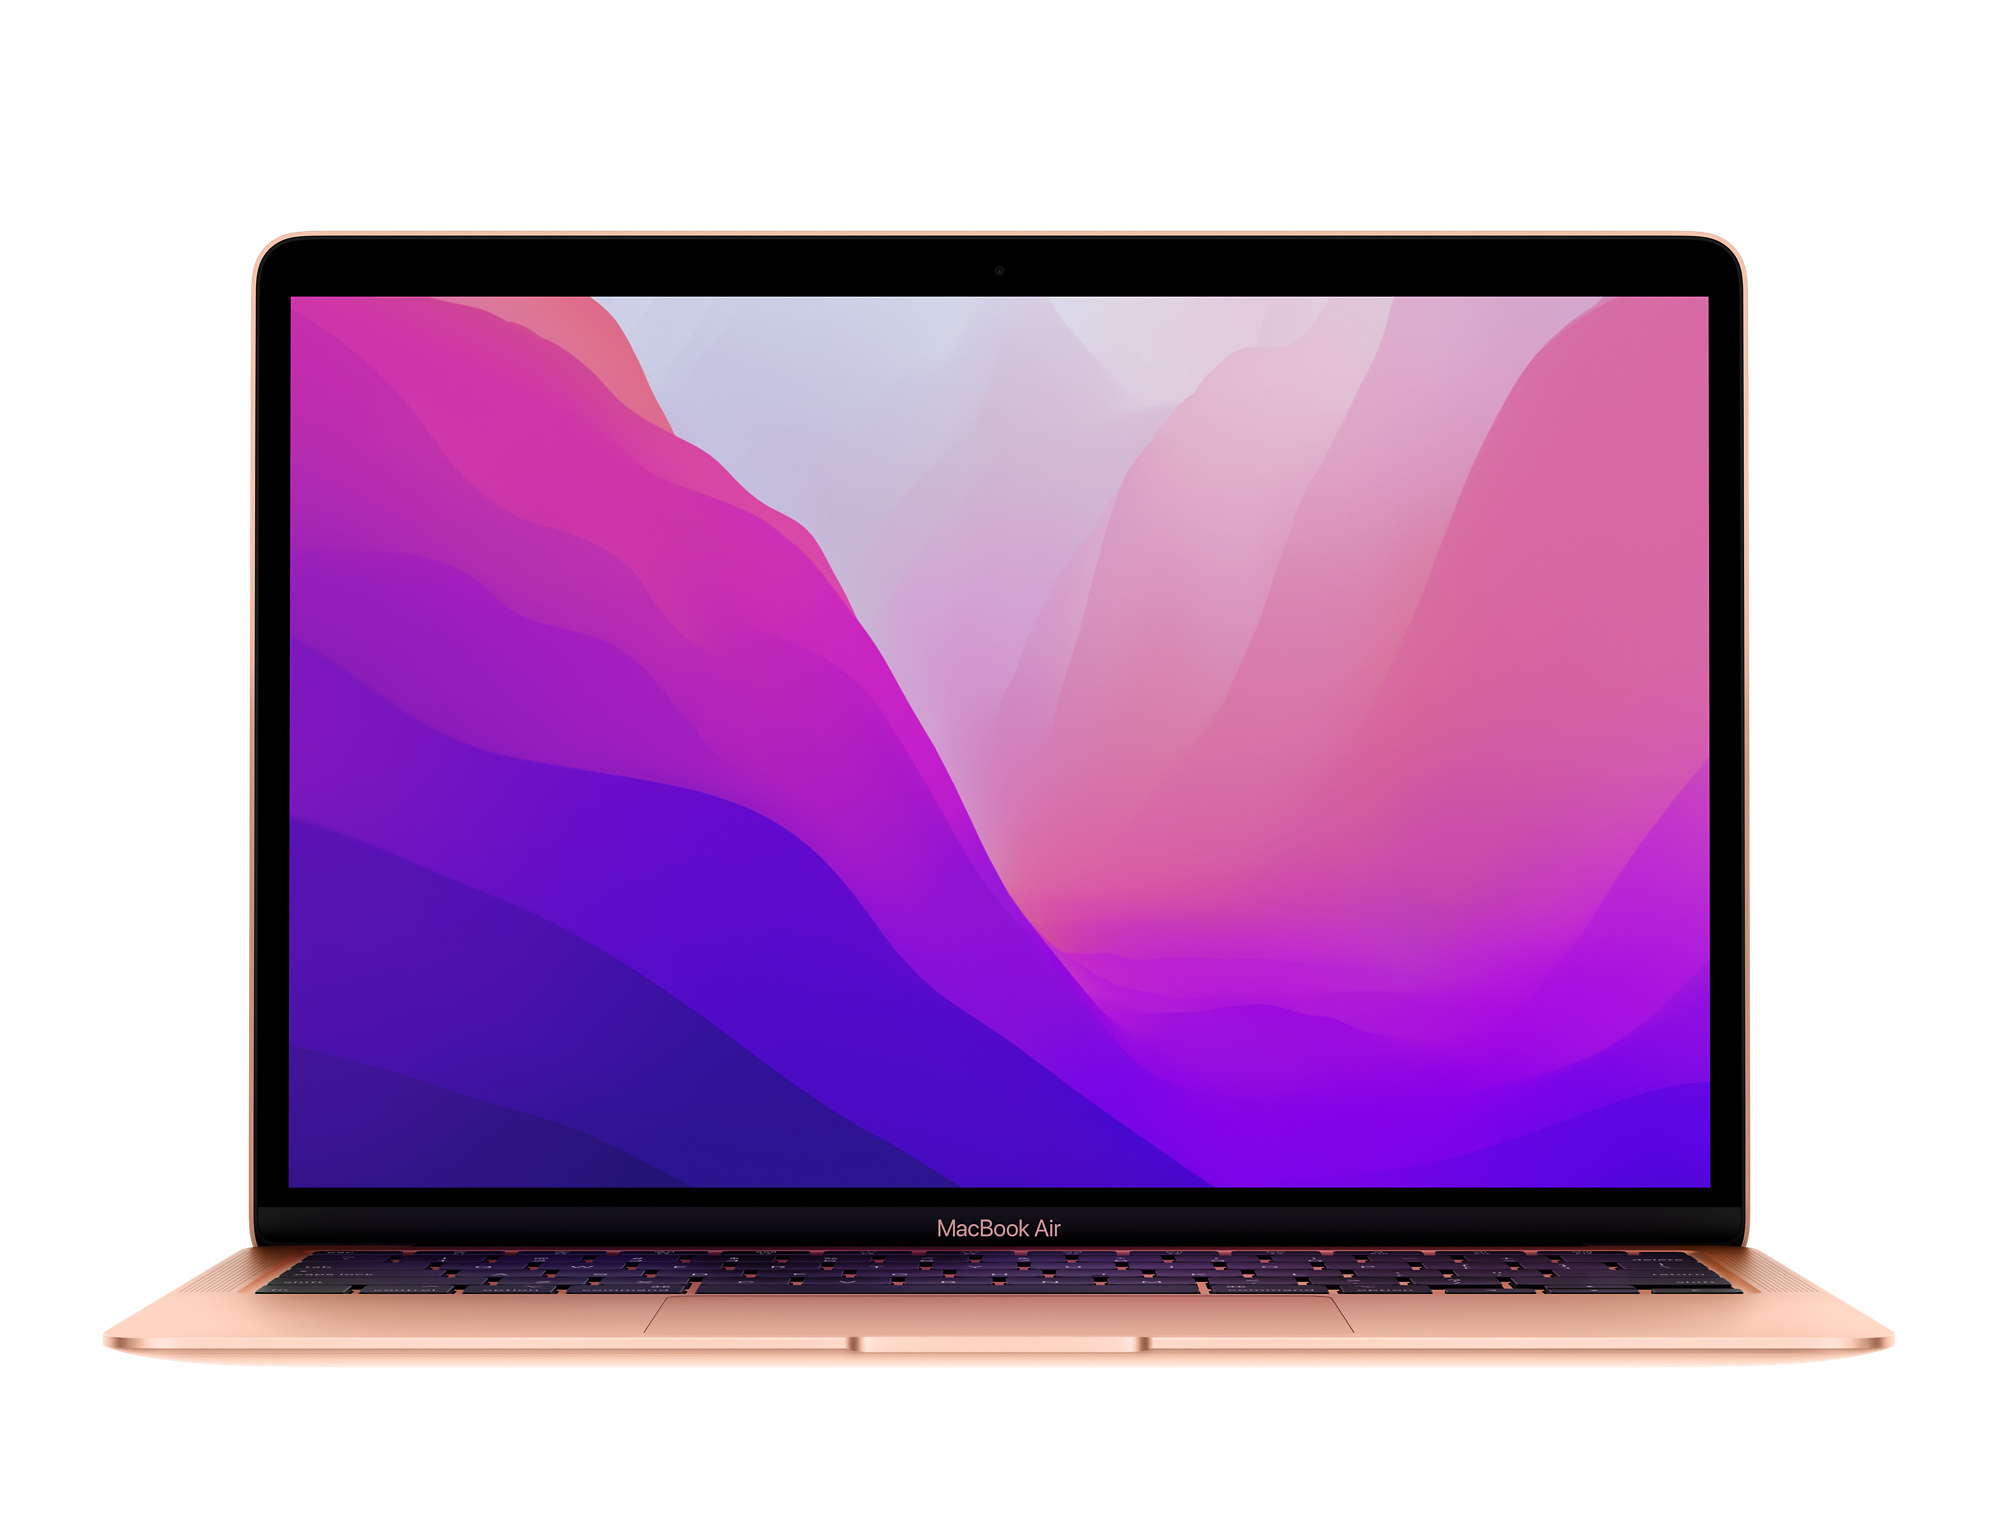 MacBook Air 13.3" Laptop - Apple M1 chip - 8GB Memory - 256GB SSD (Latest Model) - Gold $899.99